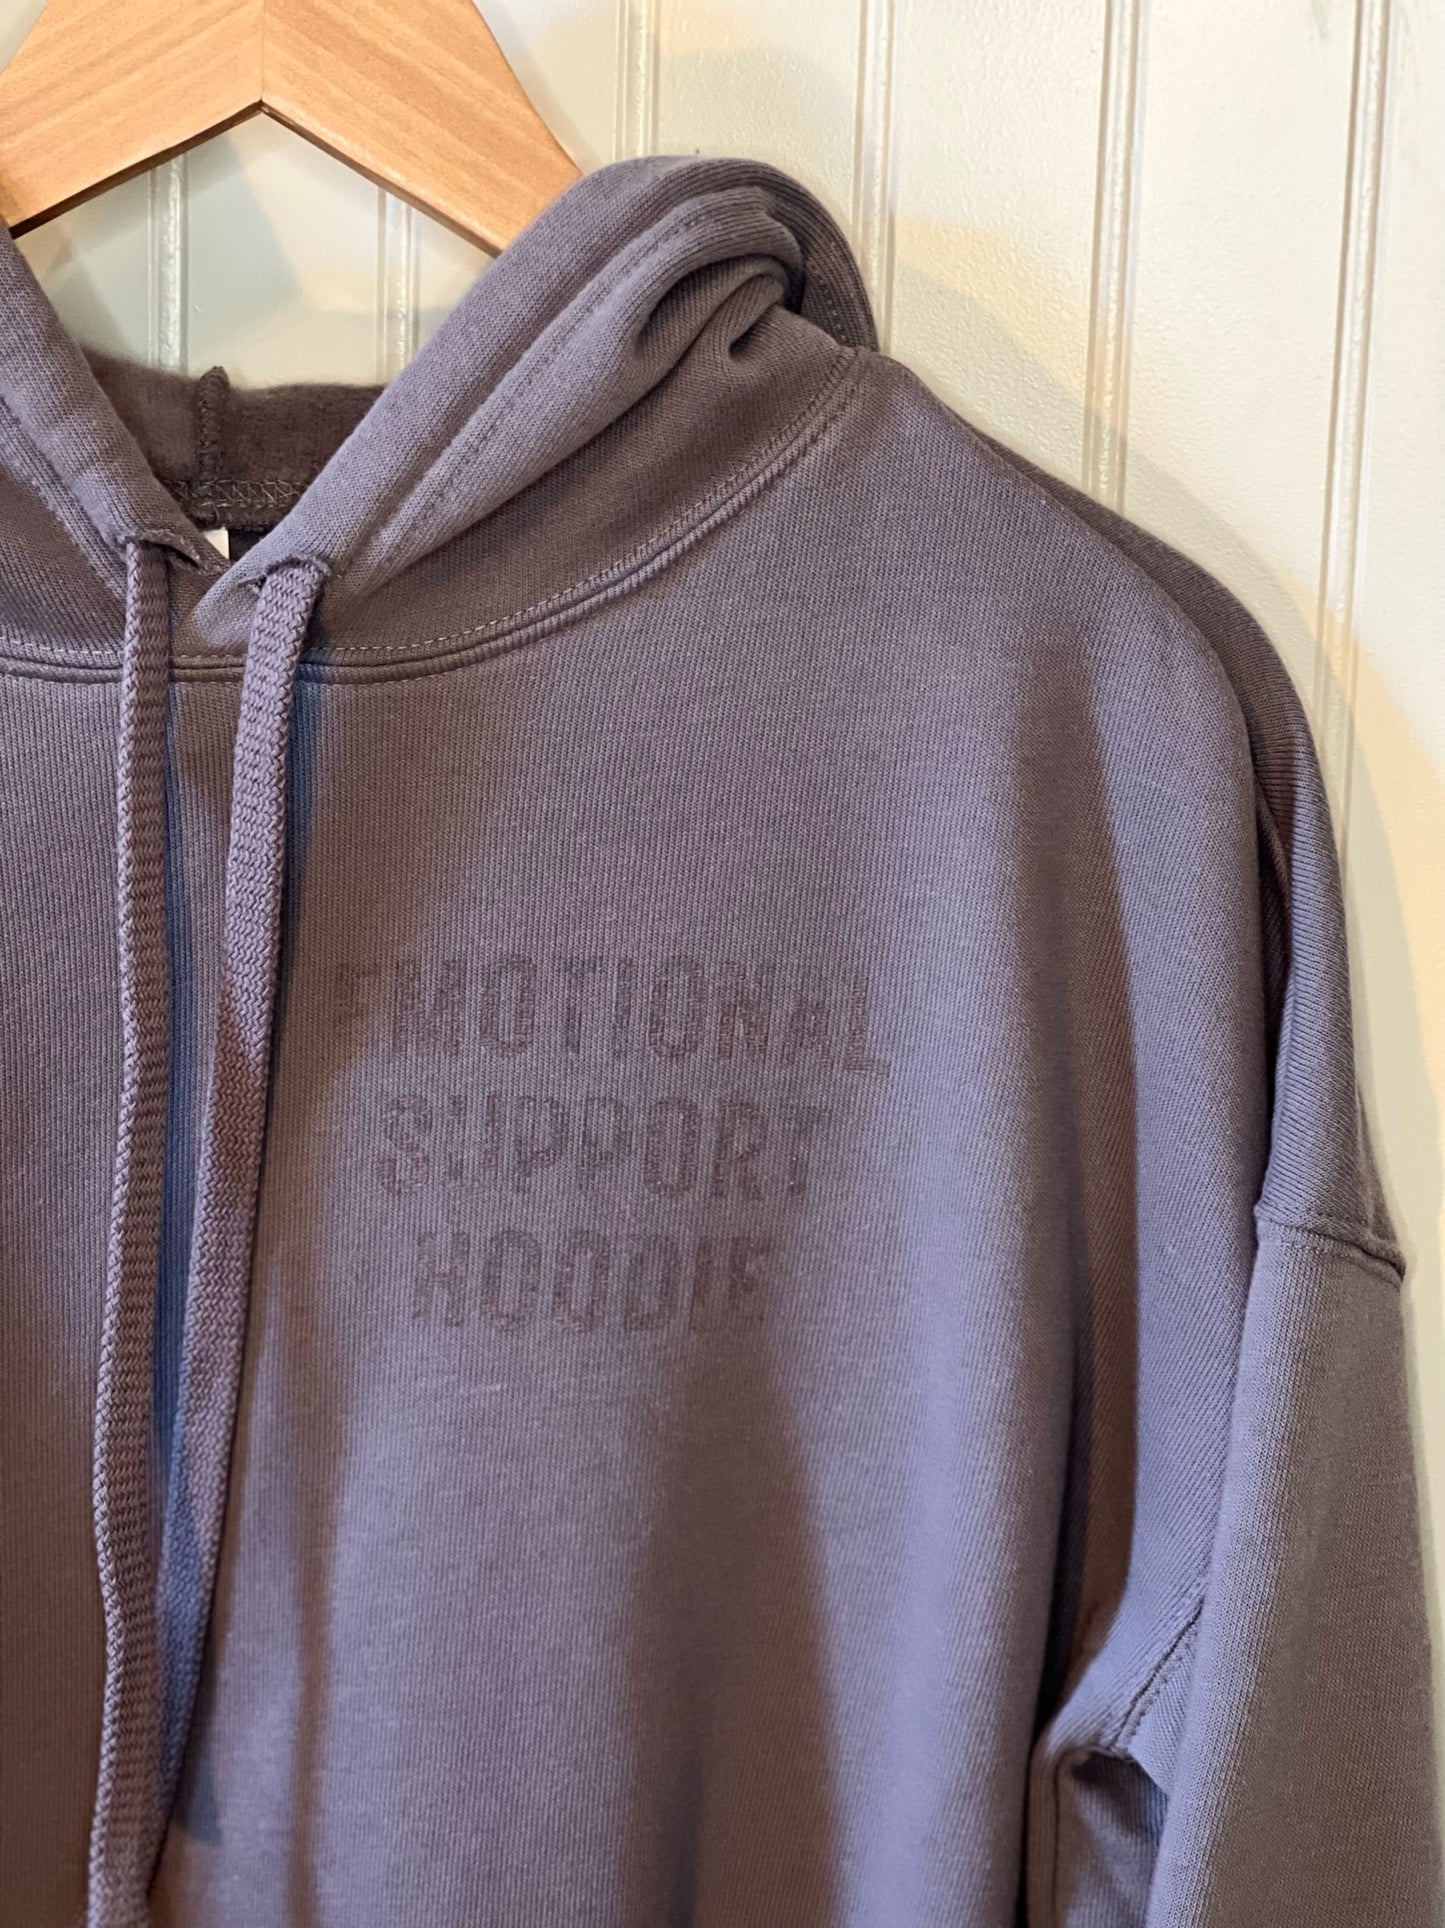 Emotional Support Hoodie - Original